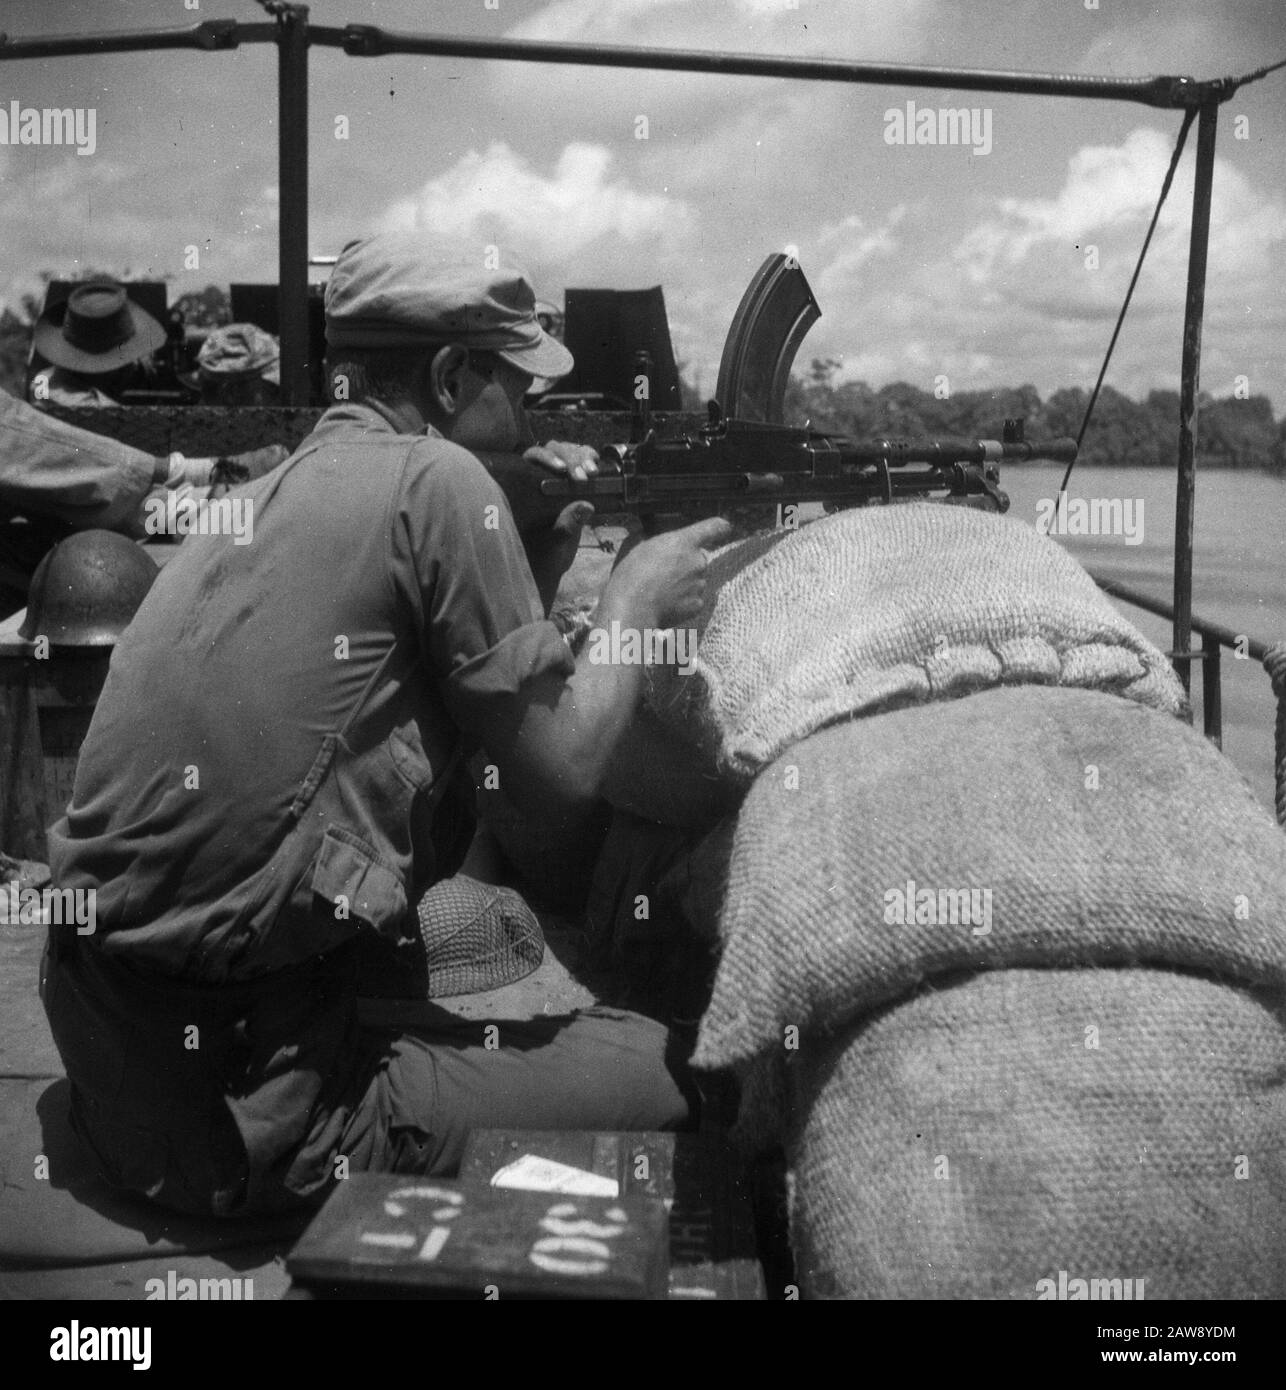 [Patrol Boat River. Bren Gunner behind sandbags] Date: 1947 Location: Indonesia Dutch East Indies Stock Photo